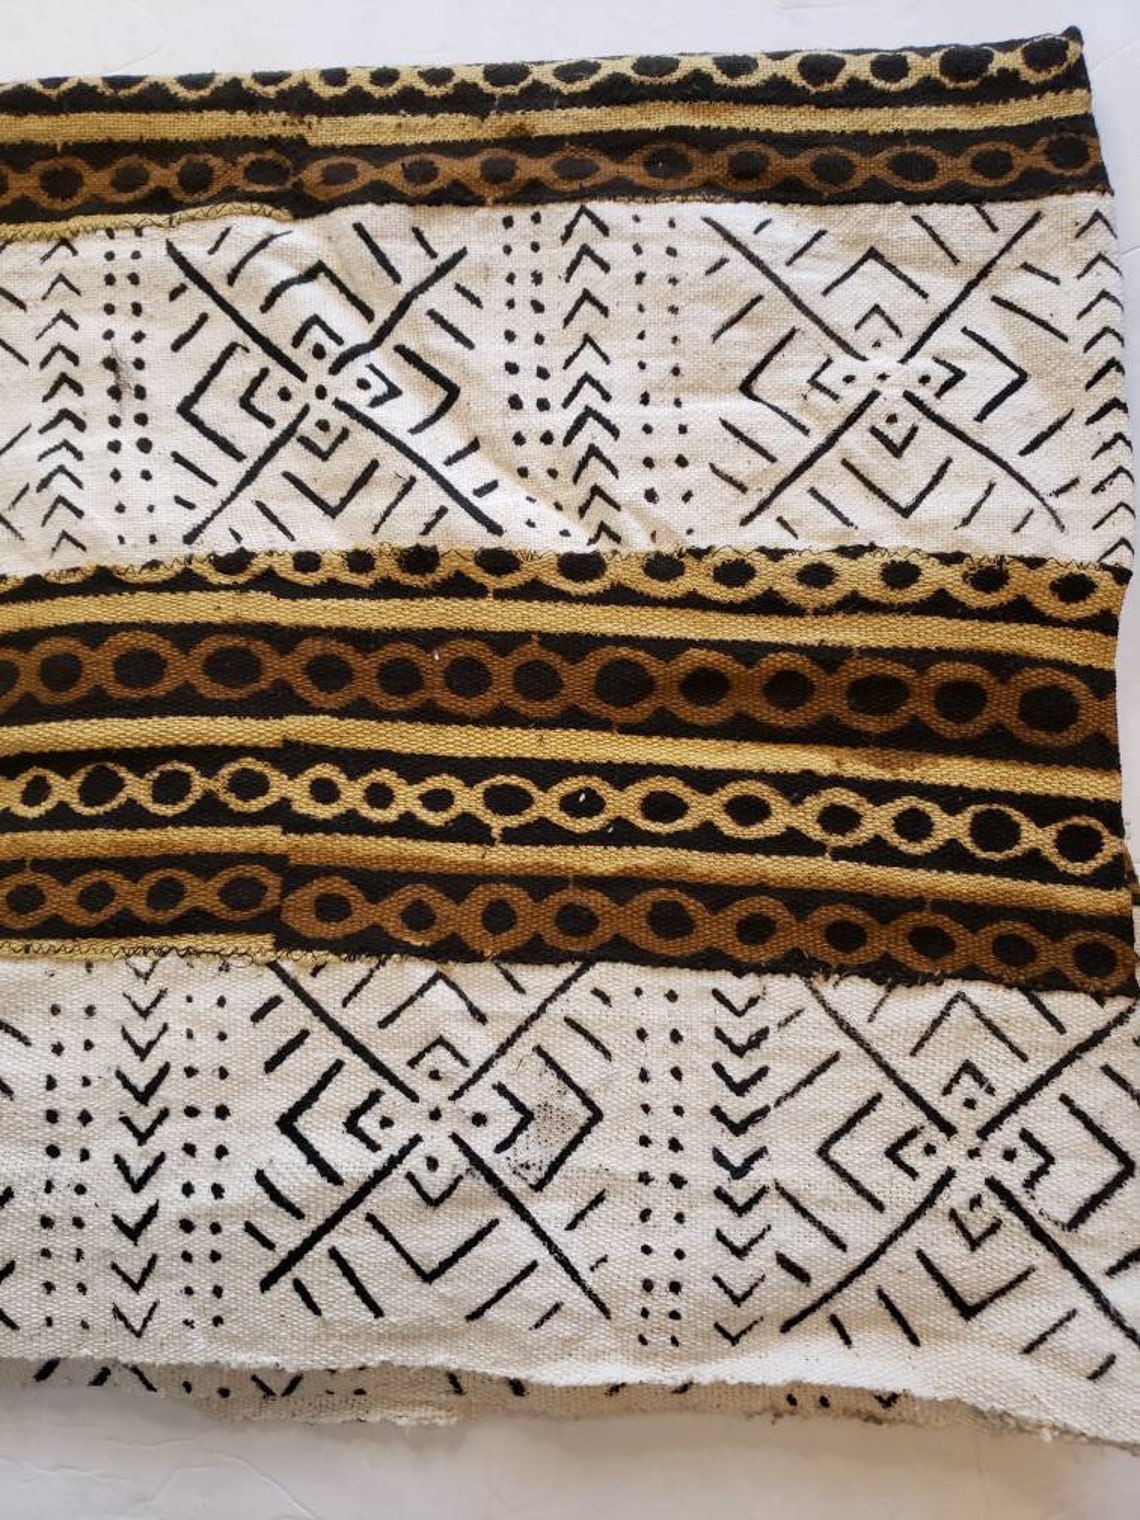 Mud Cloth Bogolan Mali Ivorian African Woven Fabric - Etsy